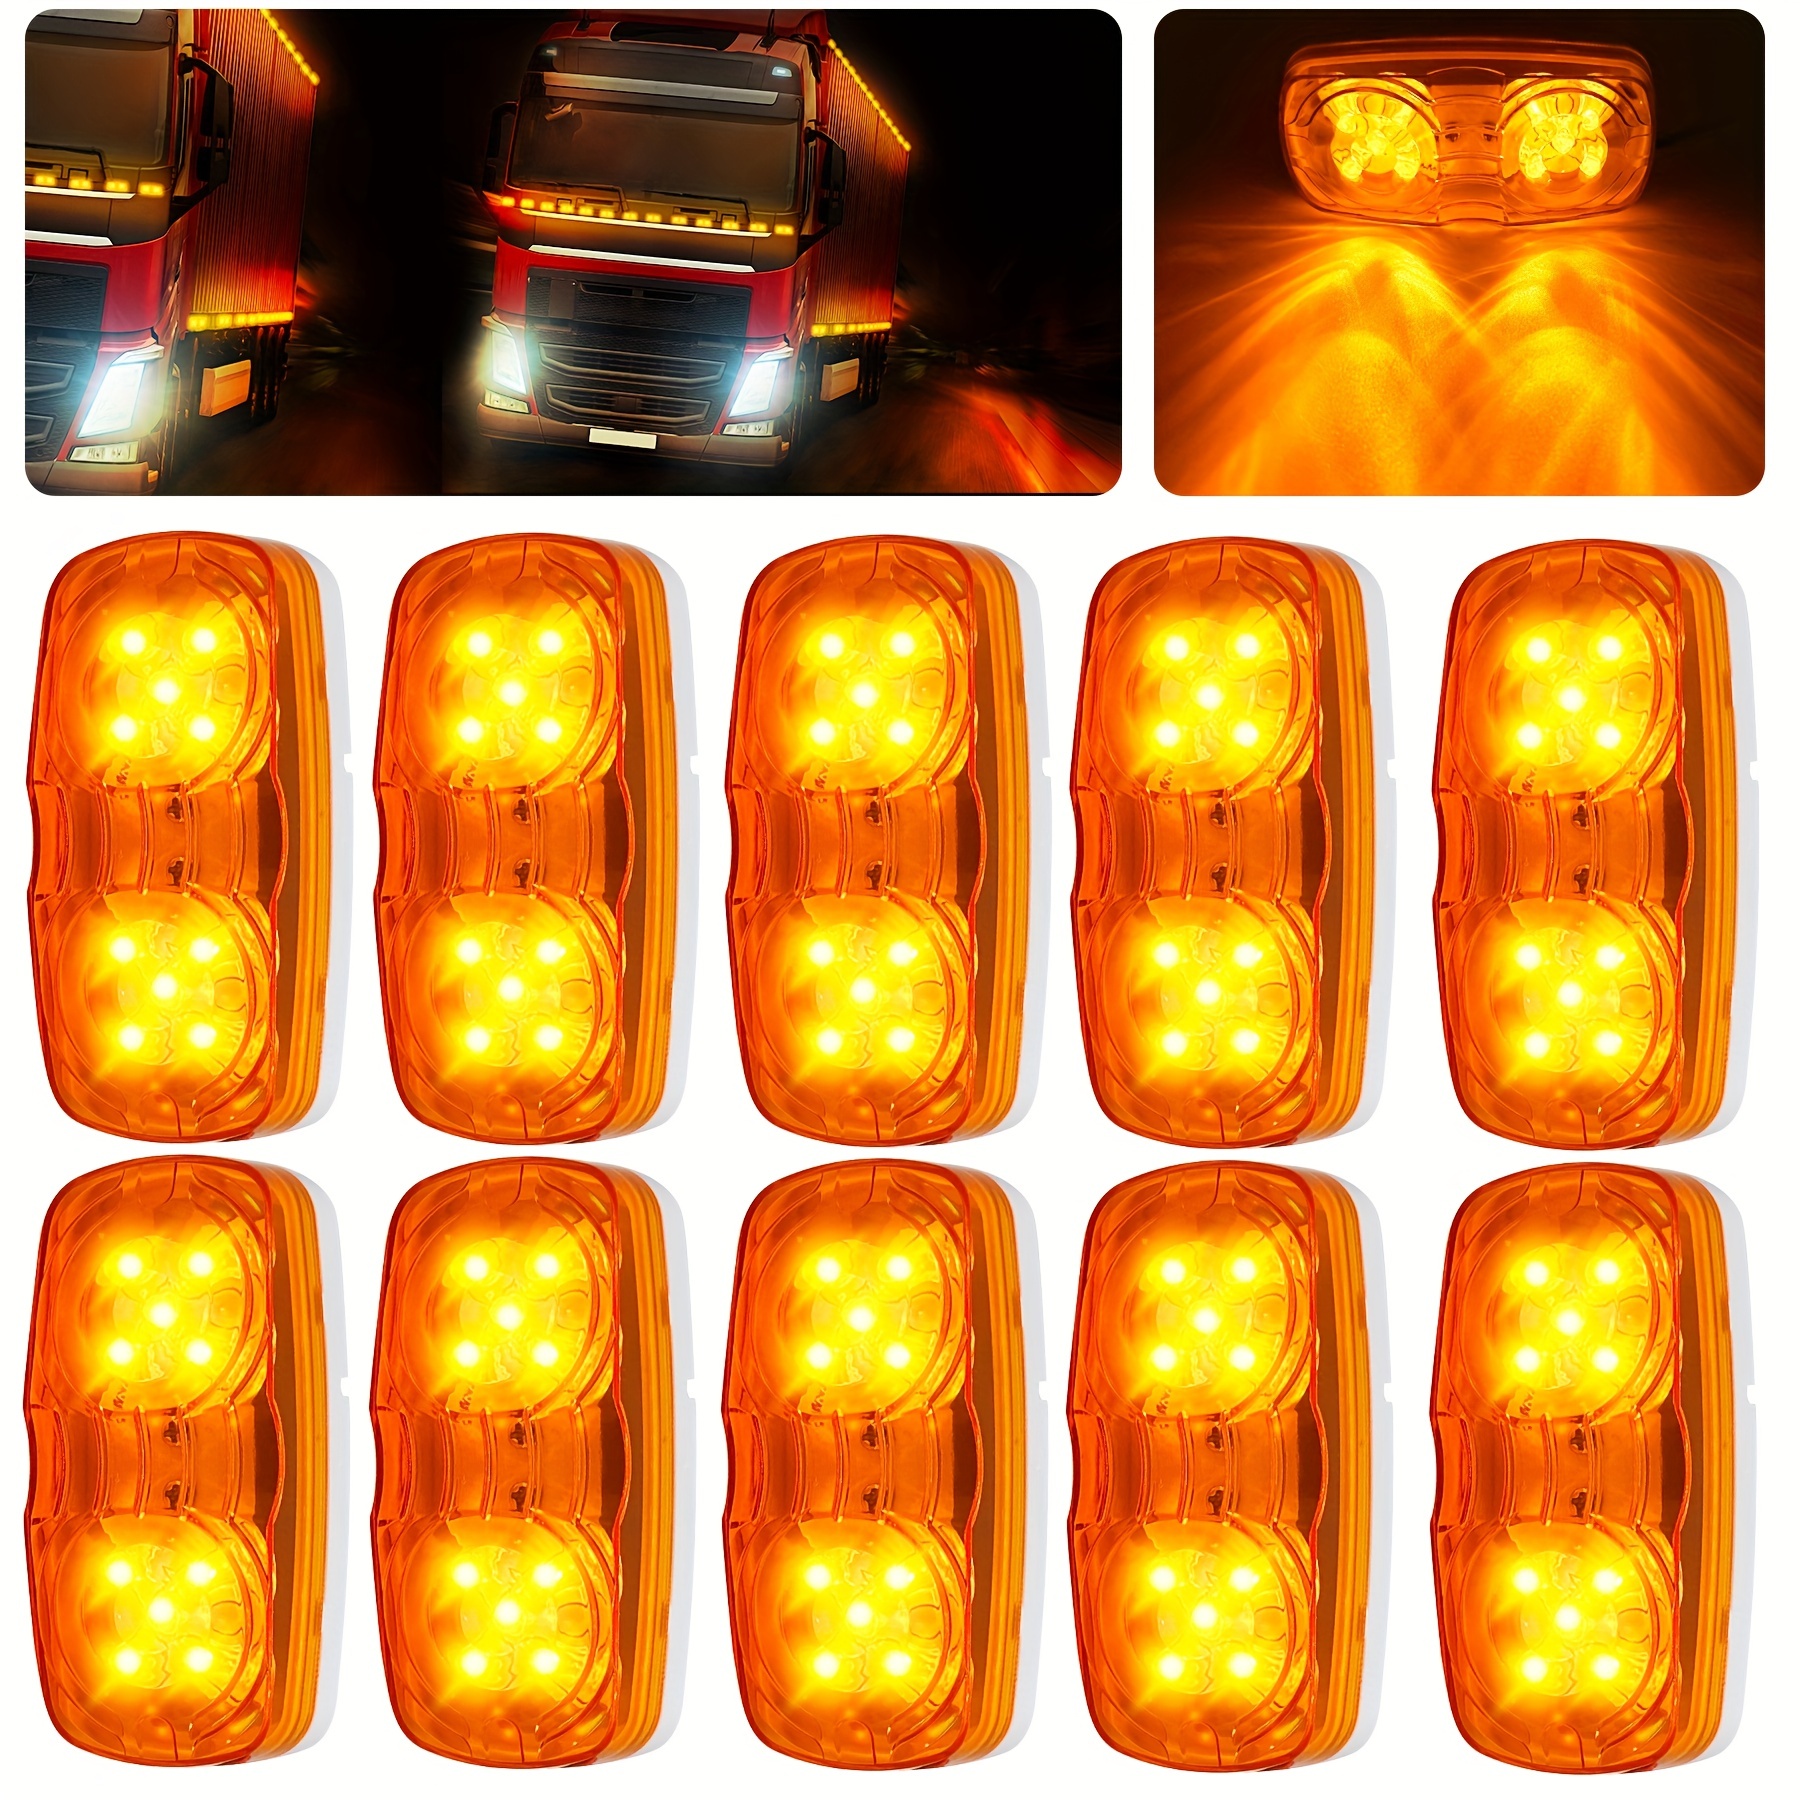 Led 12v 24v Feux Lampe Lateral pour Remorque Camion Orange